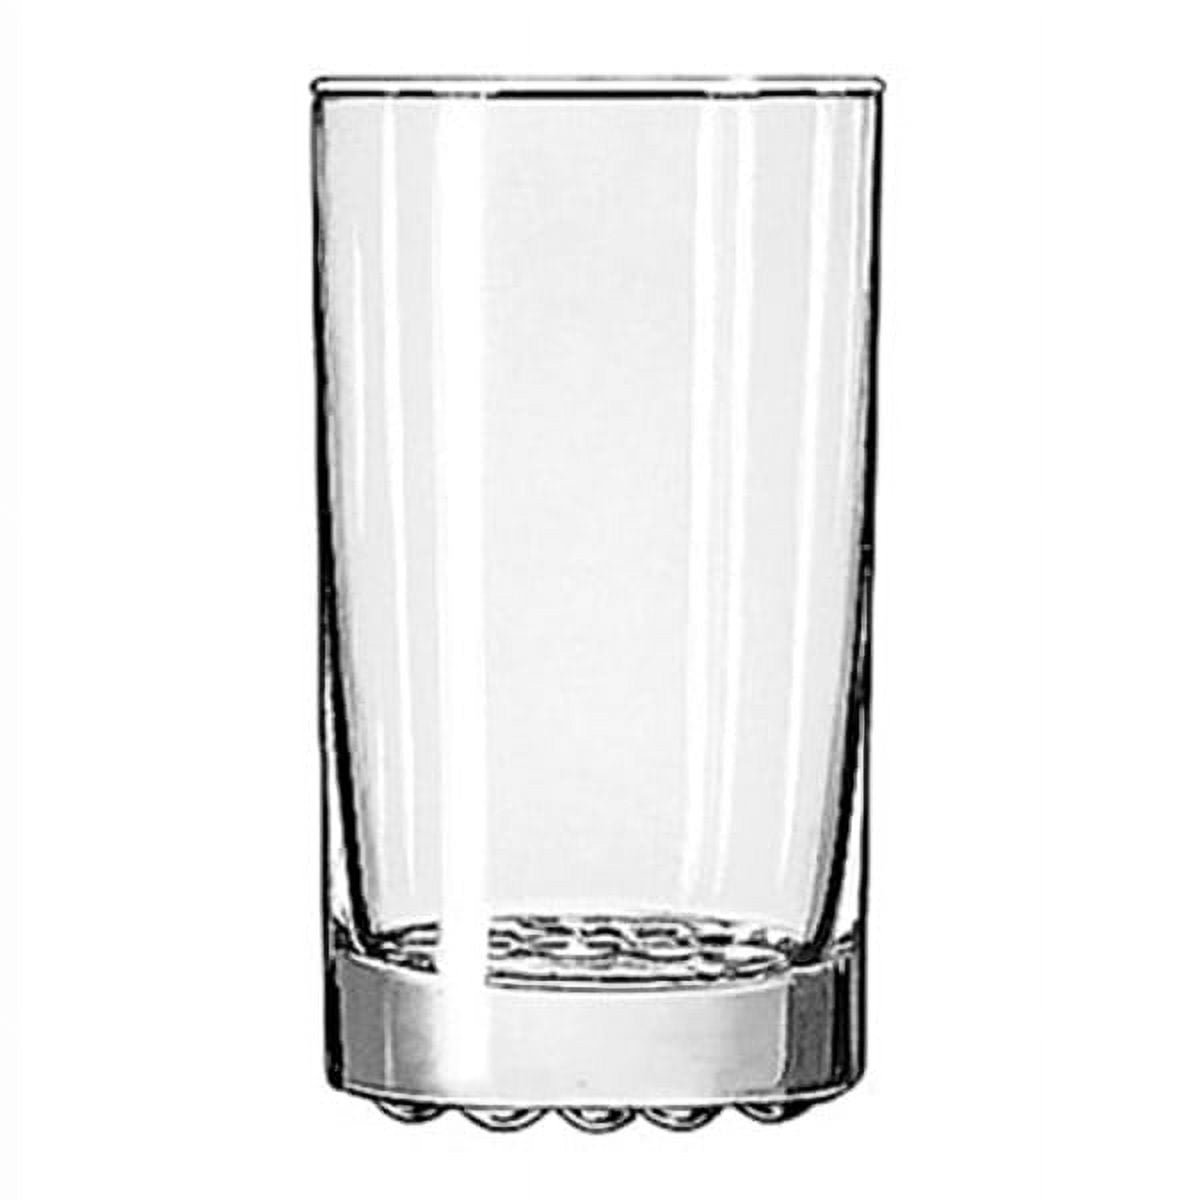 Glaver's Drinking Glasses, 12 Pc. Glass Cups, Includes 4  Highball Glasses 17 oz., 4 Rocks Glasses, 13 oz., 4 Juice Glasses, 4.5 oz.,  Whisky, Juice, Water, Beer, Cocktails, Dishwasher Safe.: Highball Glasses